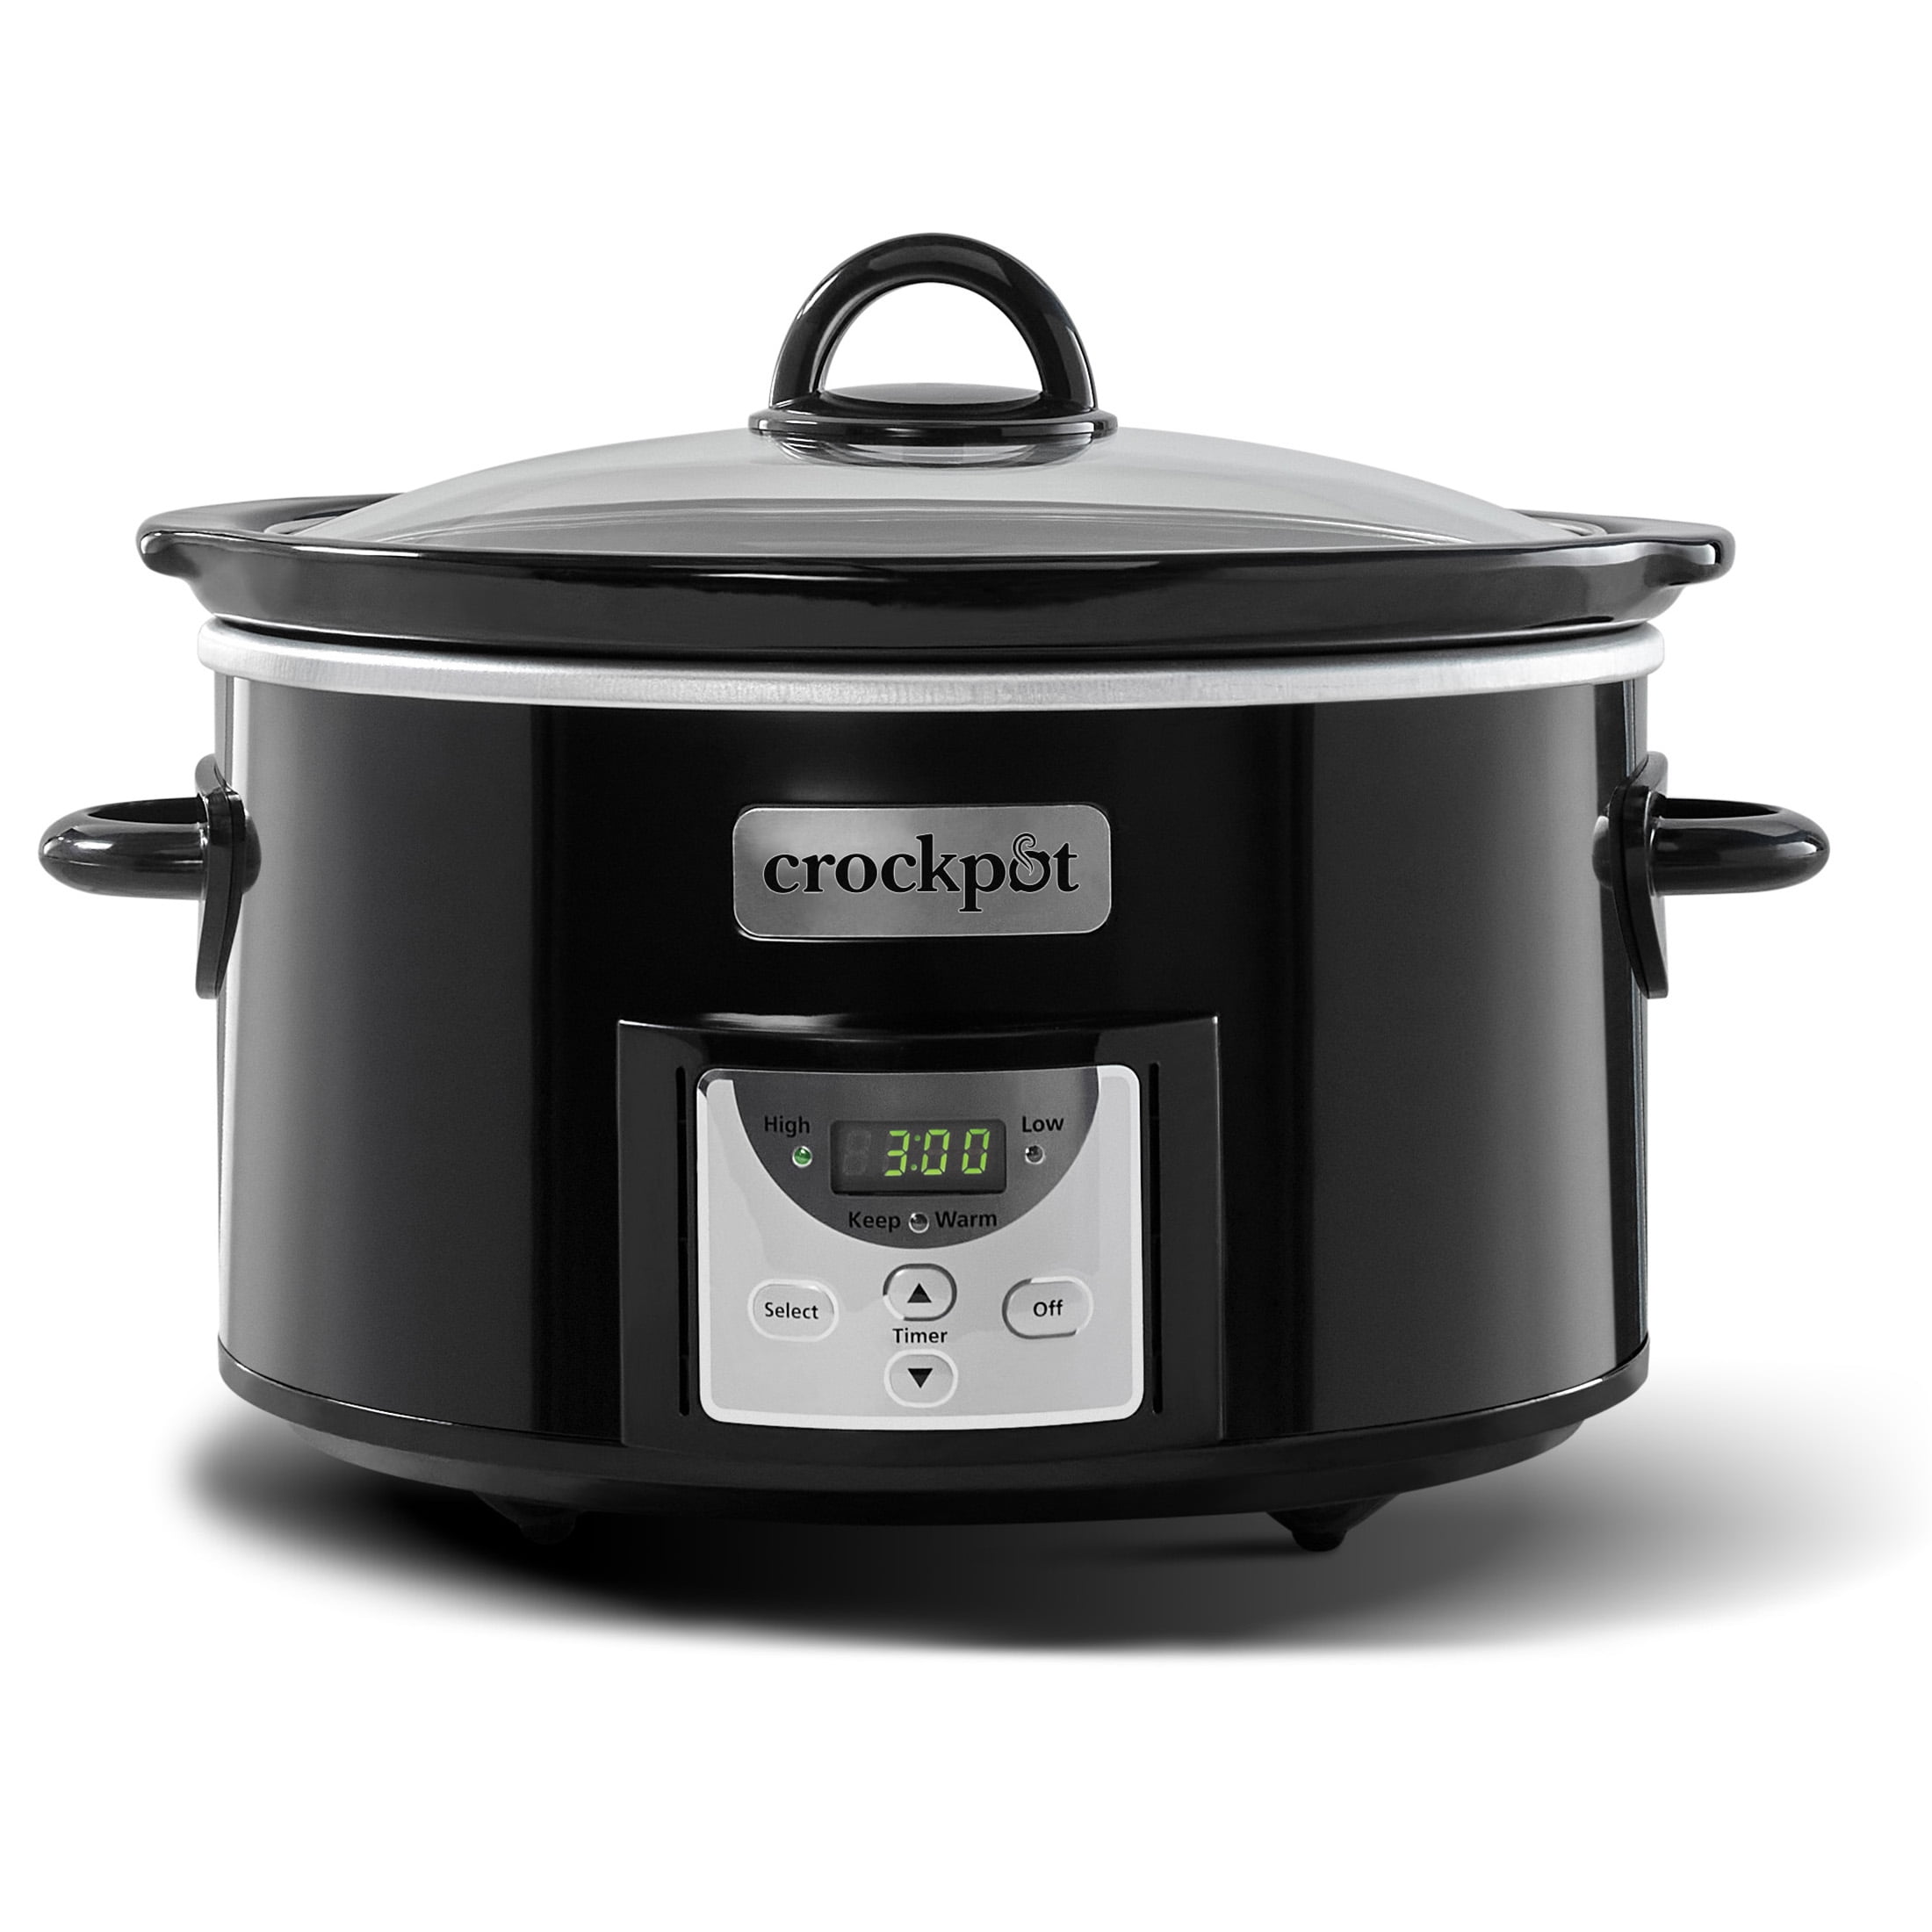 Crock-pot 4 Quart Digital Count Down Food Slow Cooker Kitchen Appliance, Black